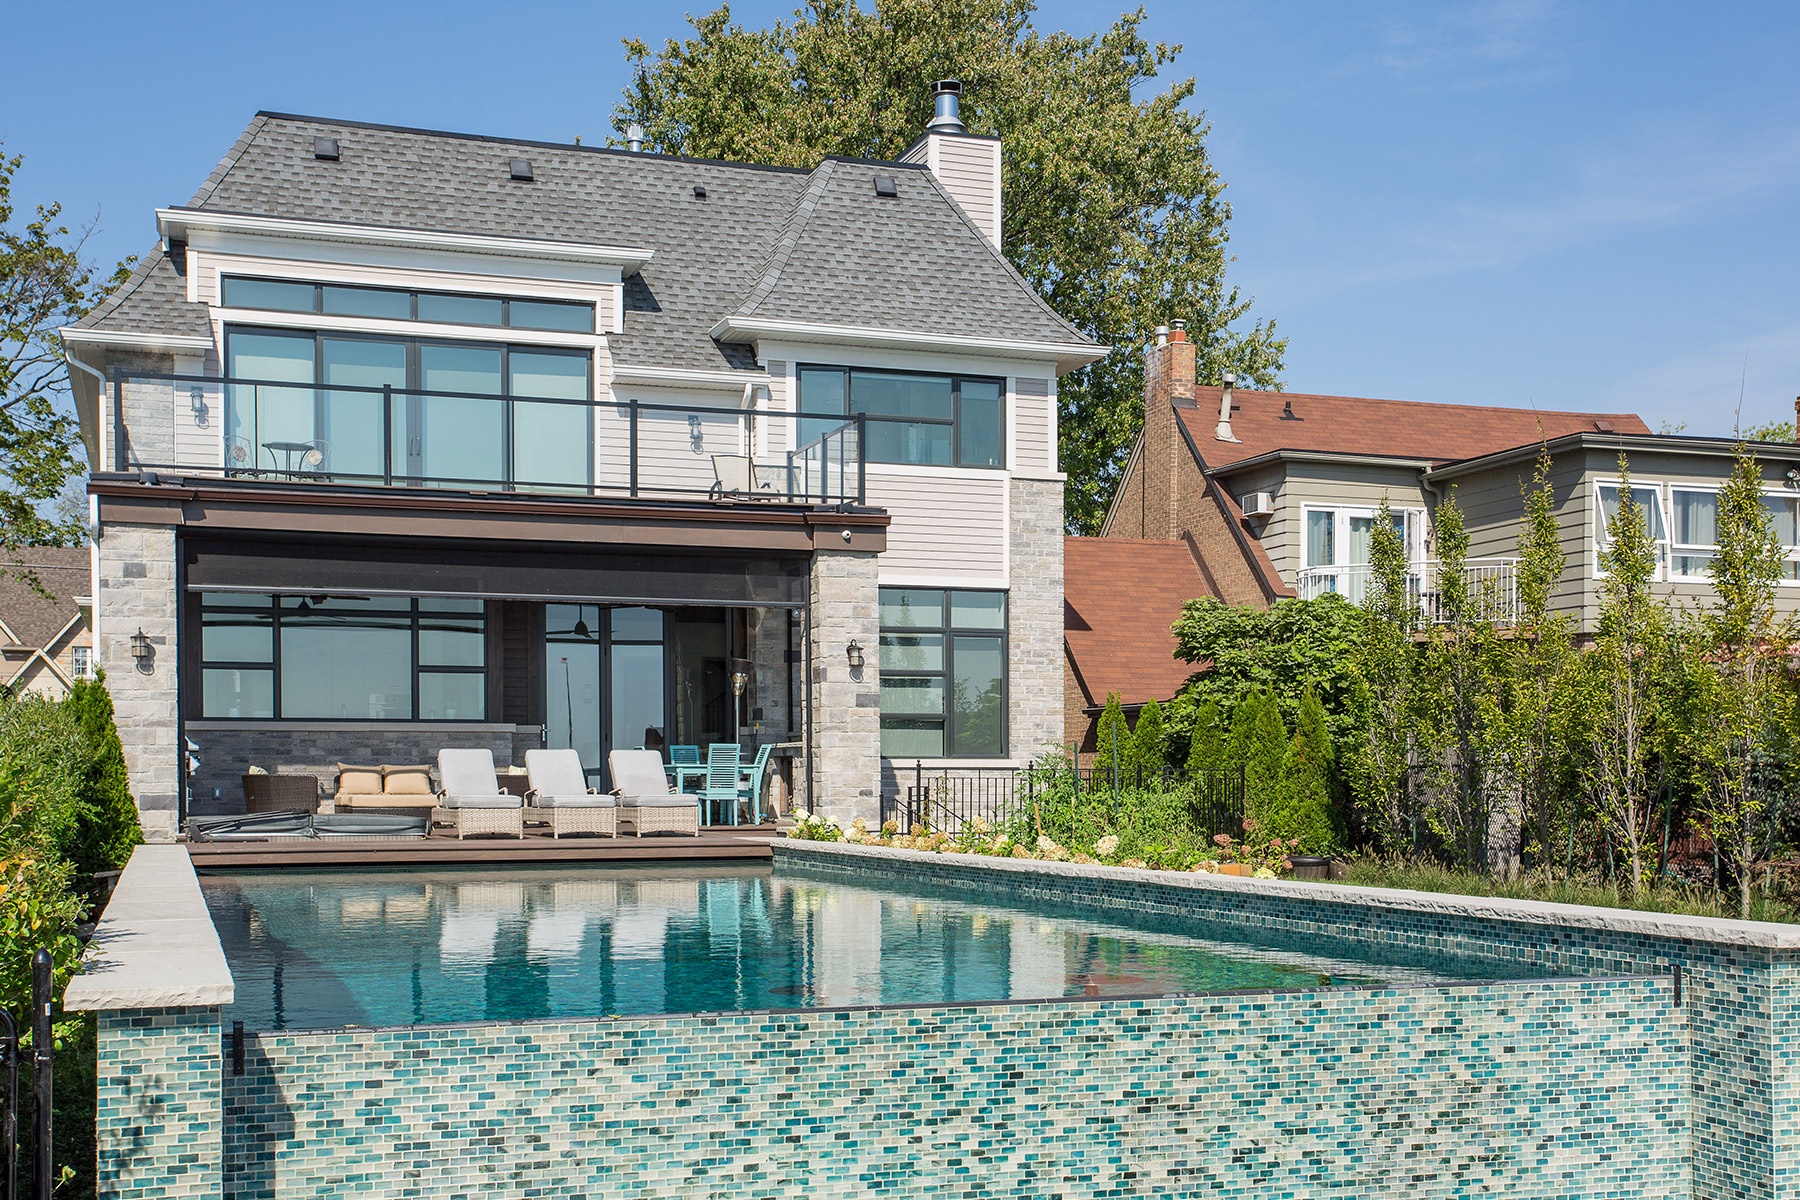 Mississauga custom home with natural stone, backyard pool and shingled roof.